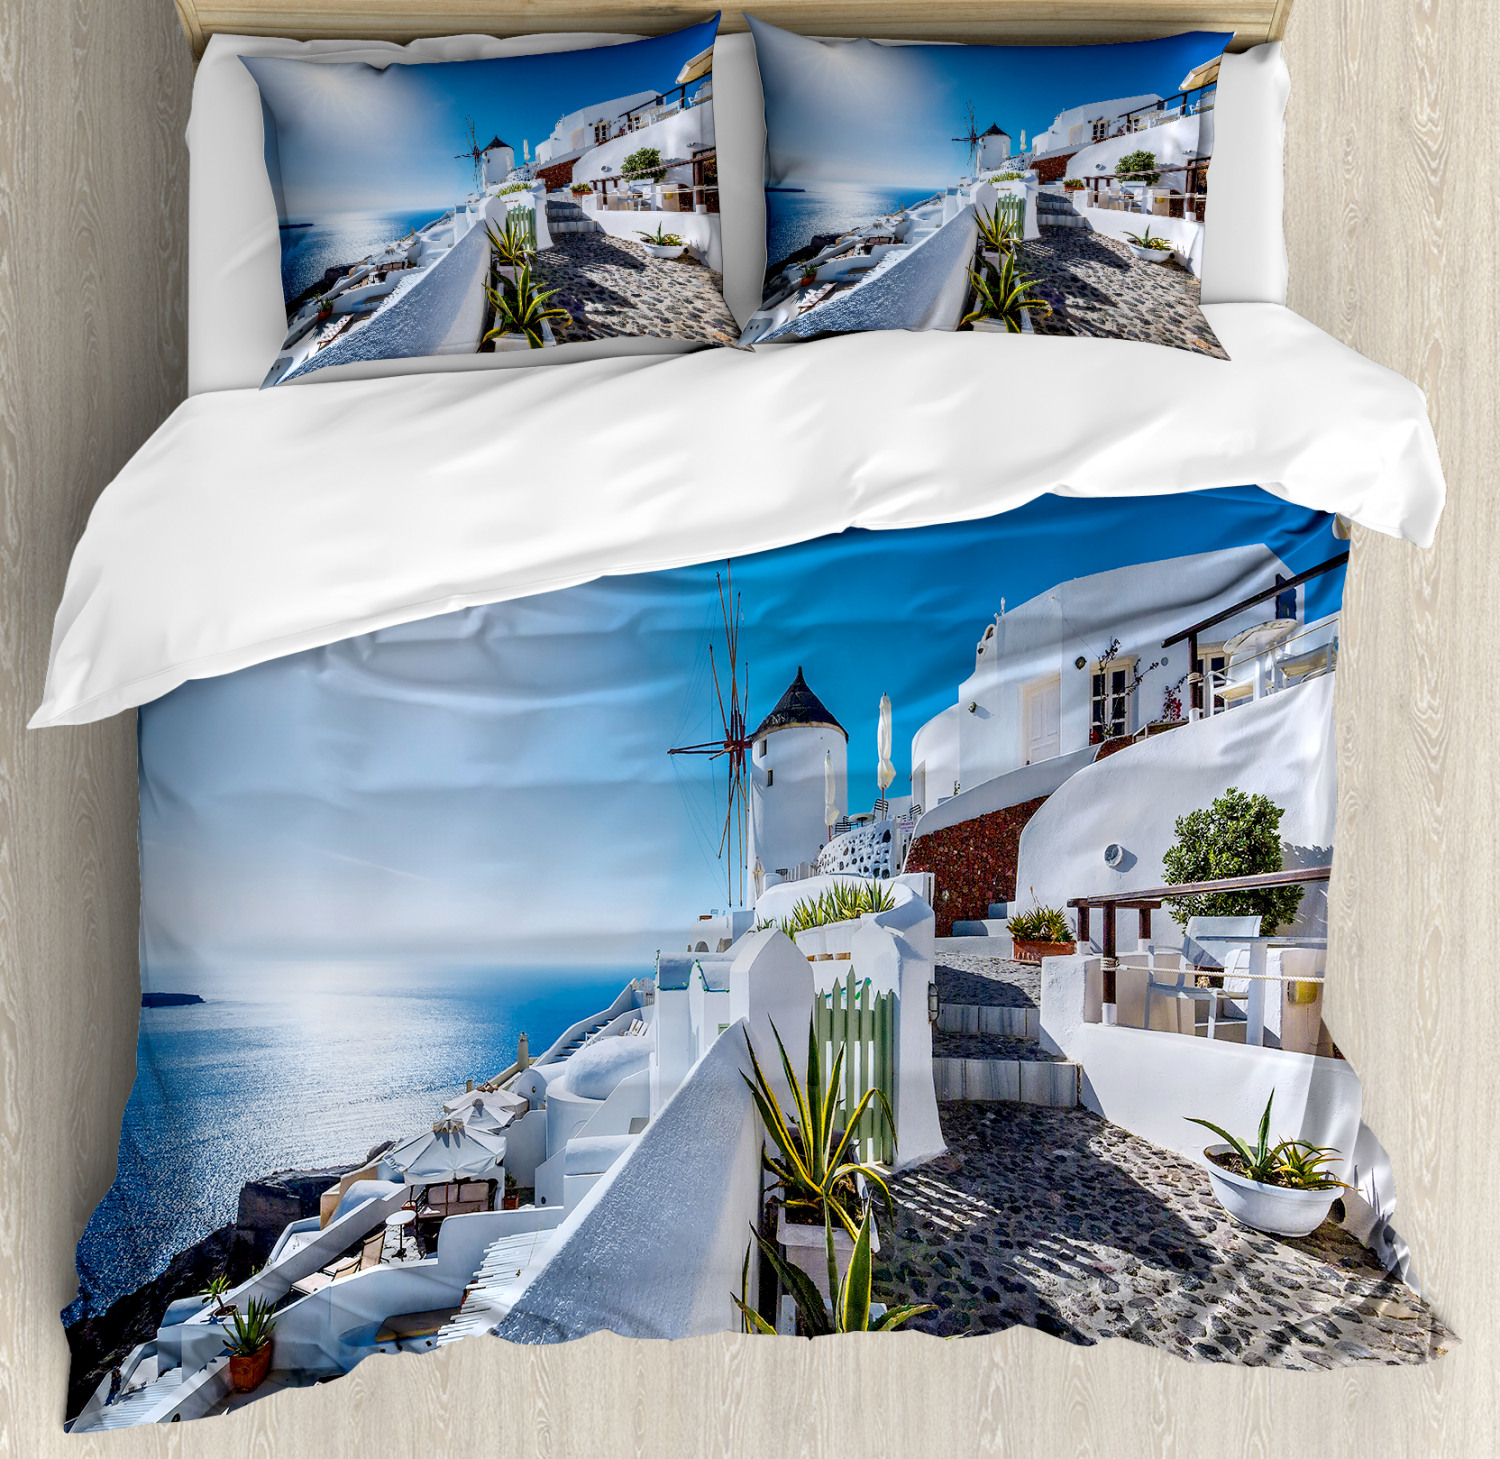 Summer Duvet Cover Set With Pillow Shams Oia Village In Santorini